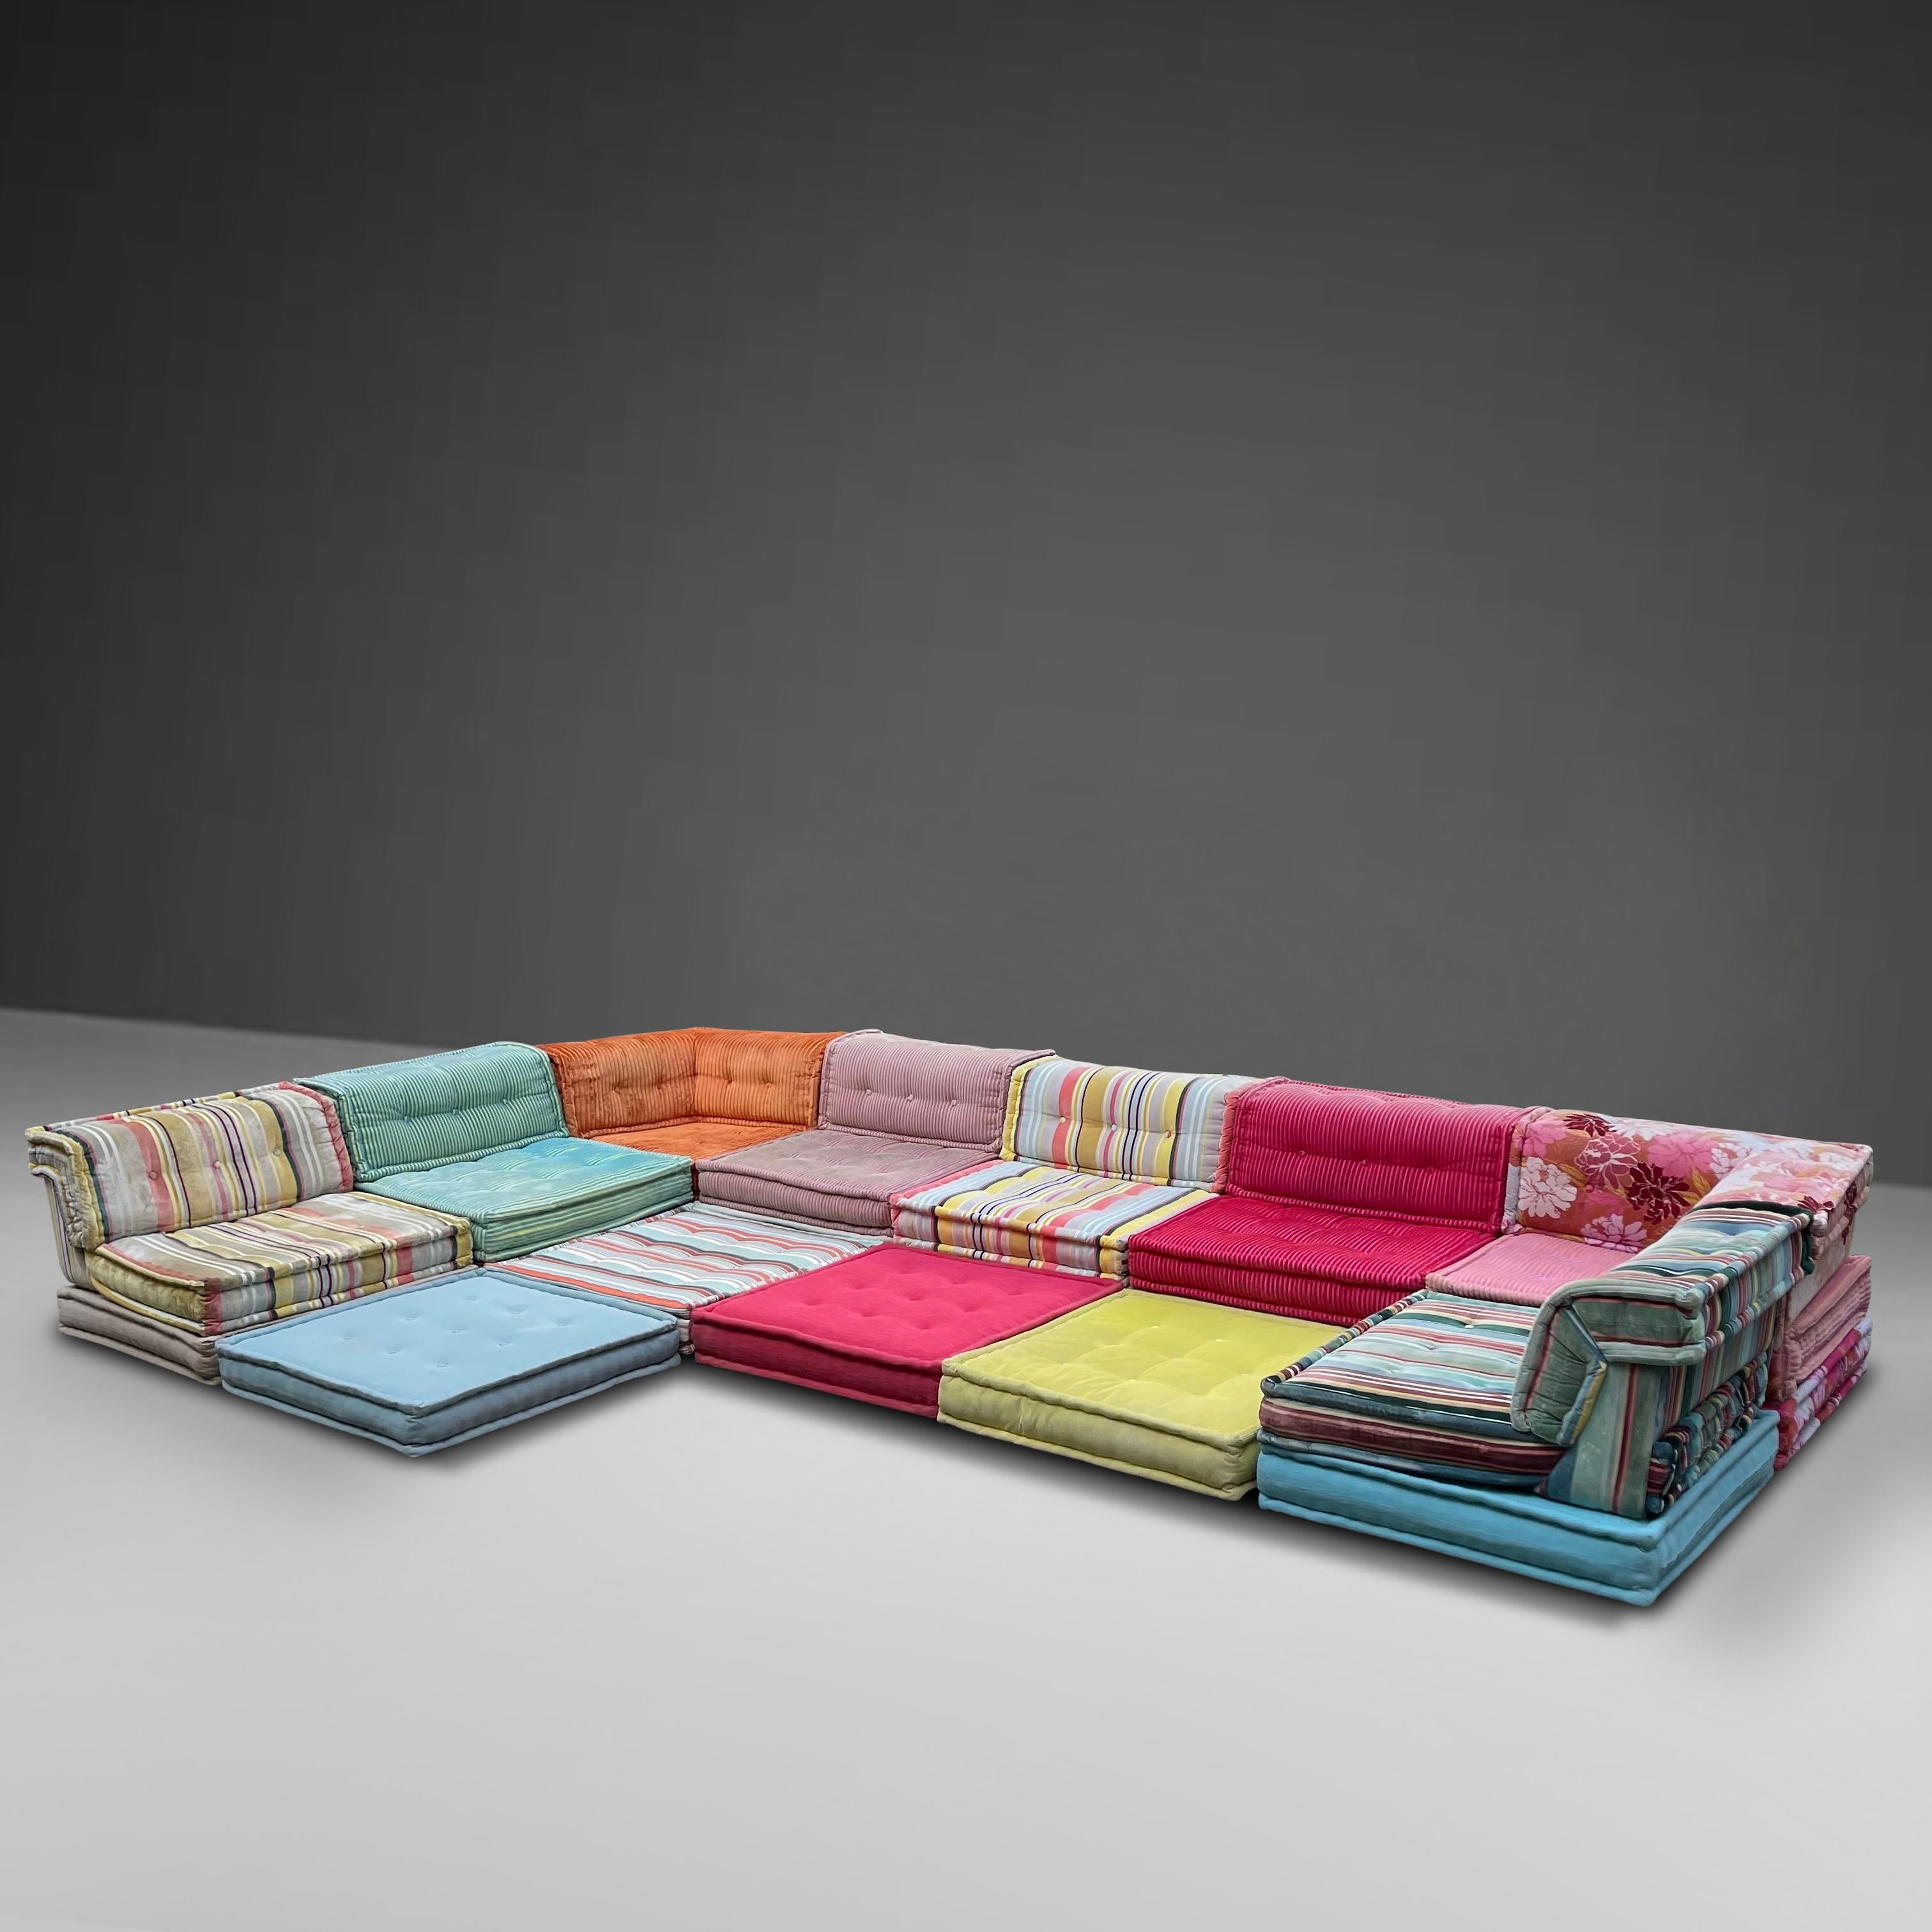 'Mah Jong' Modular Sectional Sofa Signed by Roche Bobois, France 2010 For Sale 4